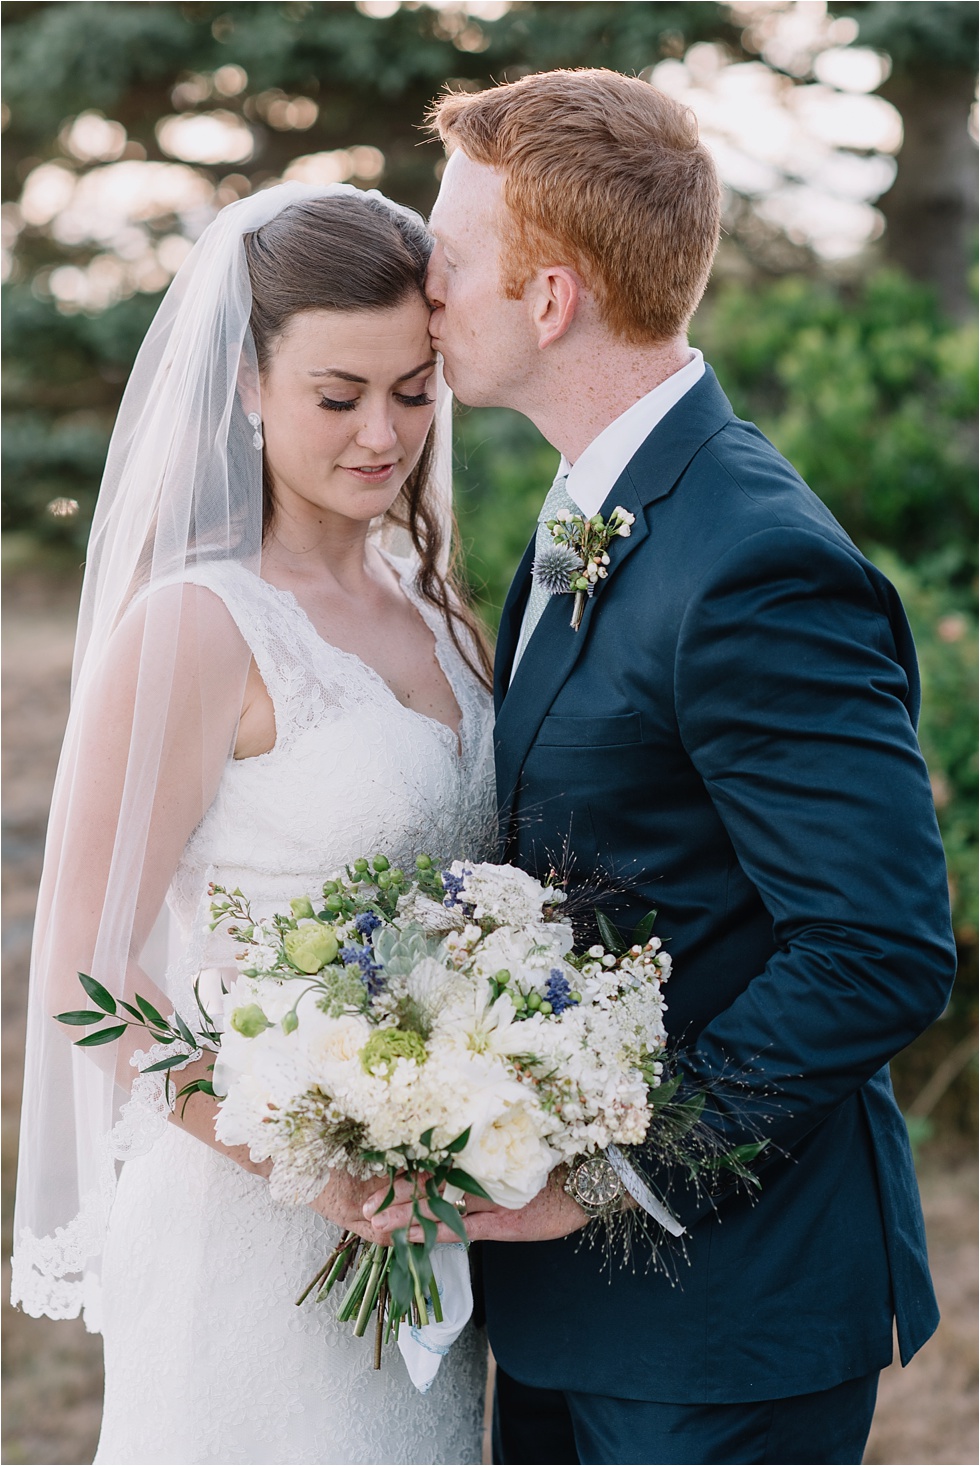 Lindsay + Brendan - Boothbay Harbor Wedding, Maine - Showit Blog